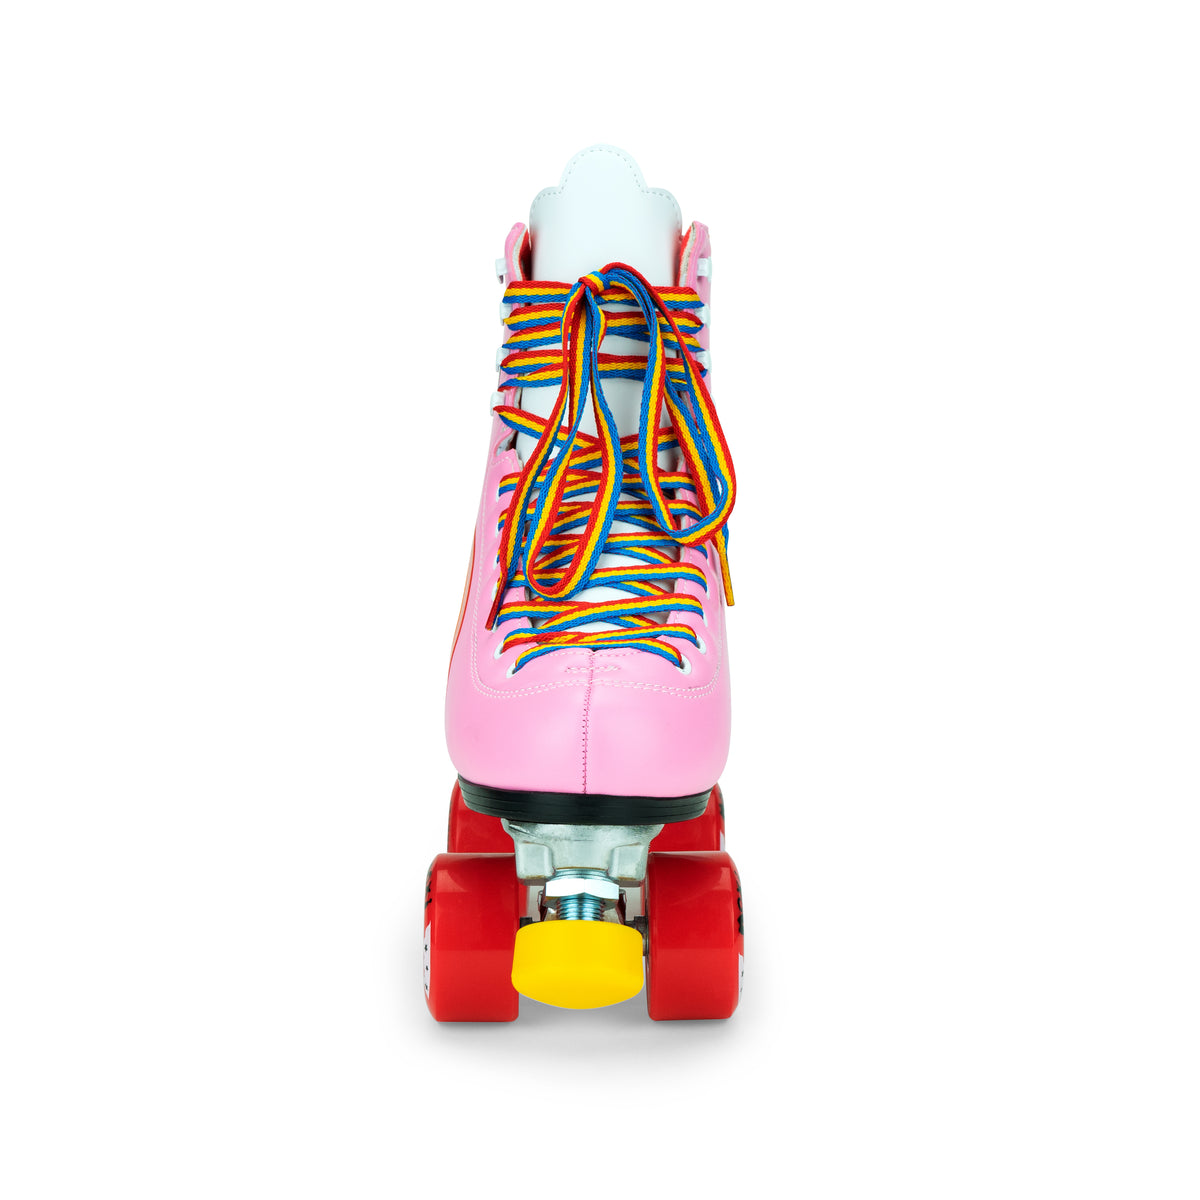 Moxi Rainbow Rider Roller Skates - Pink Heart - FINAL SALE!